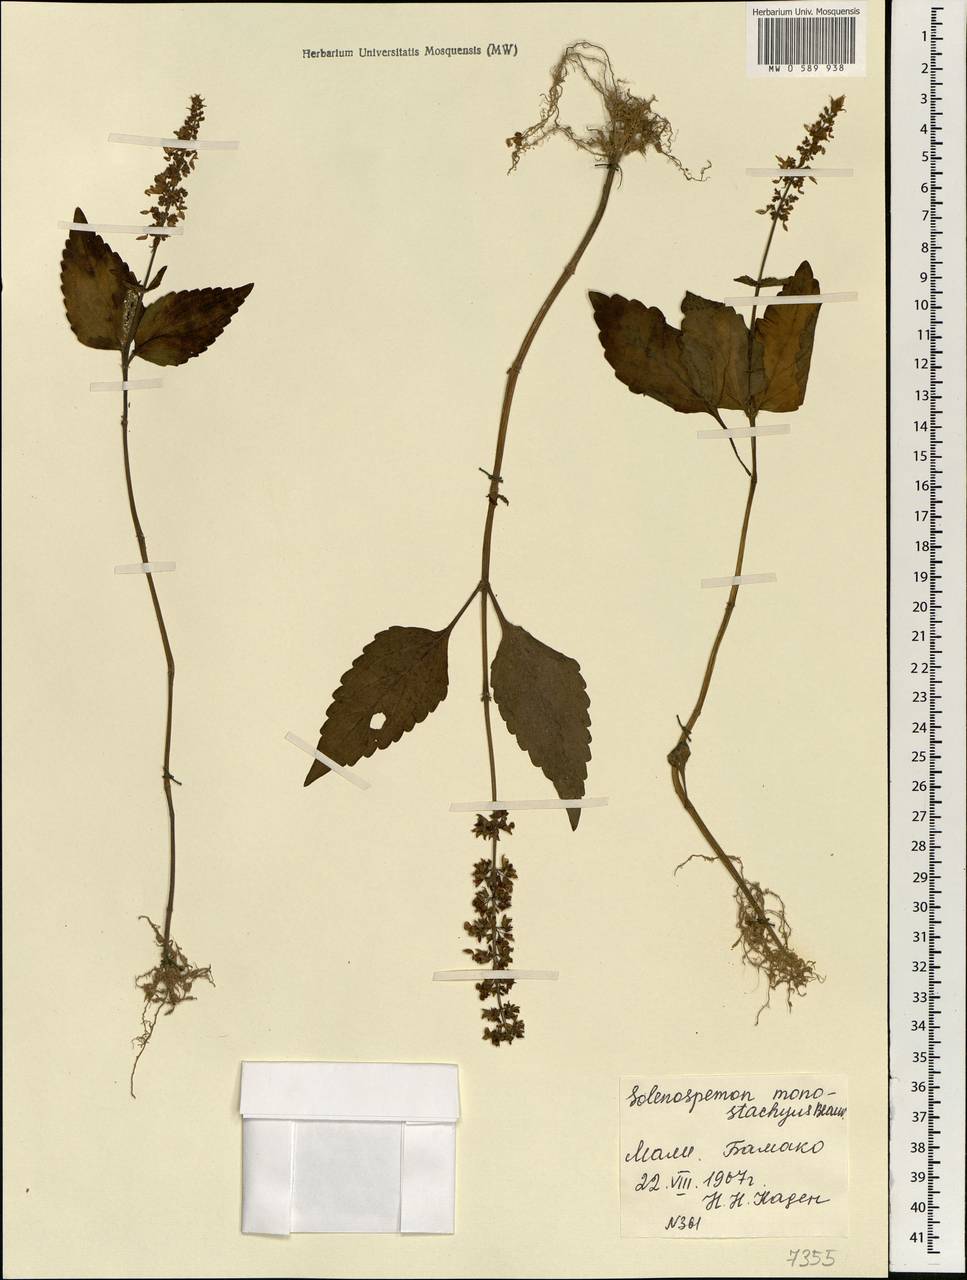 Plectranthus monostachyus (P.Beauv.) B.J.Pollard, Африка (AFR) (Мали)